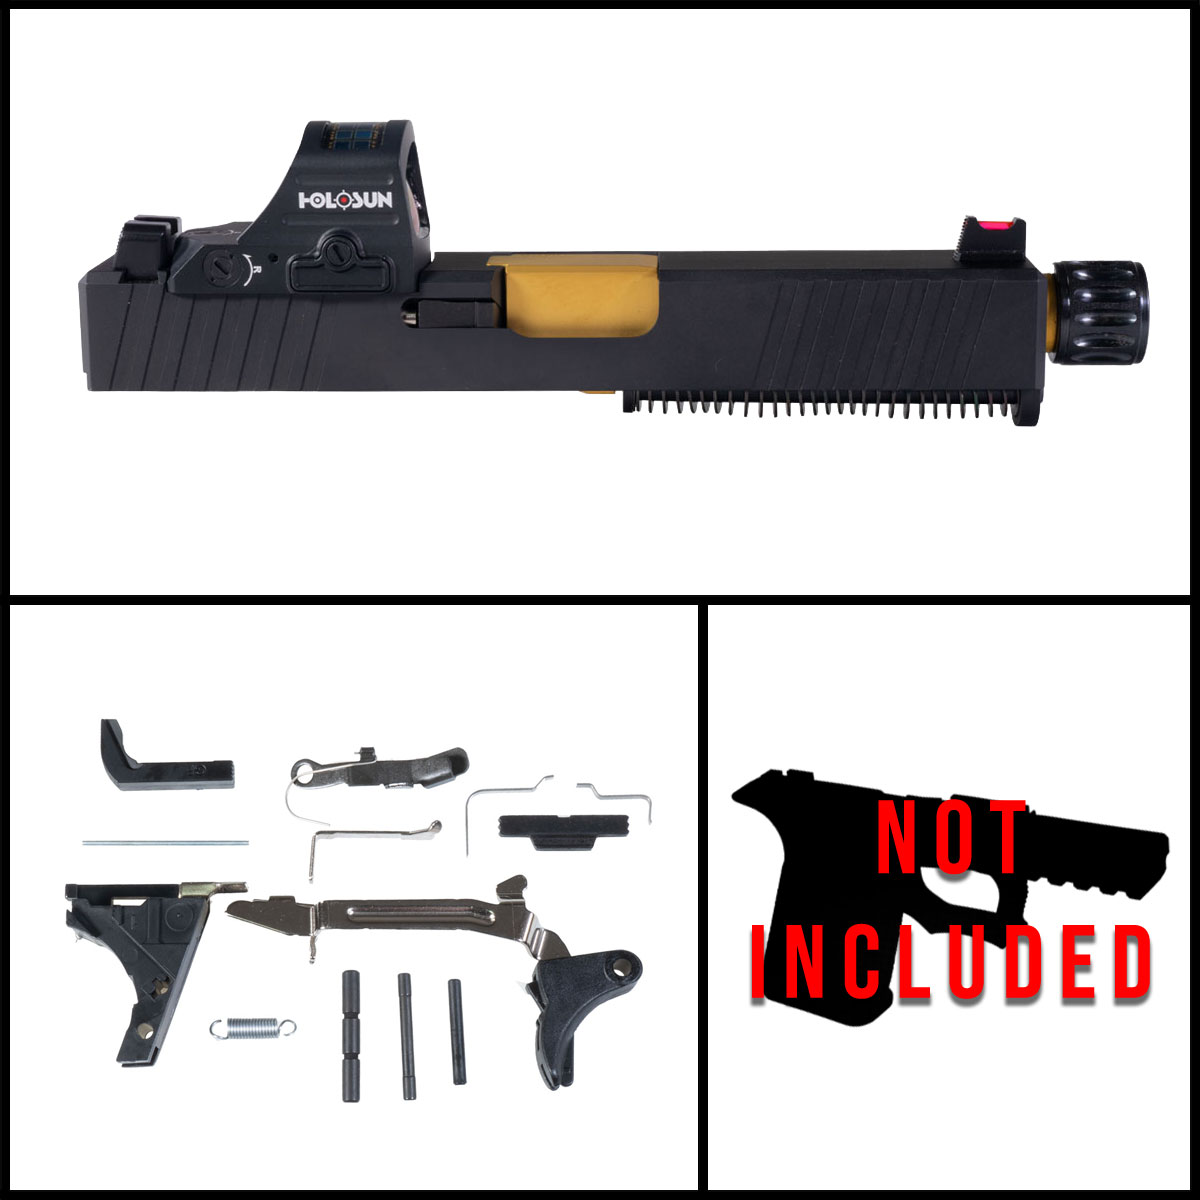 DTT 'Cogito w/ HS507C-X2 Red Dot' 9mm Full Pistol Build Kit (Everything Minus Frame) - Glock 19 Gen 1-3 Compatible